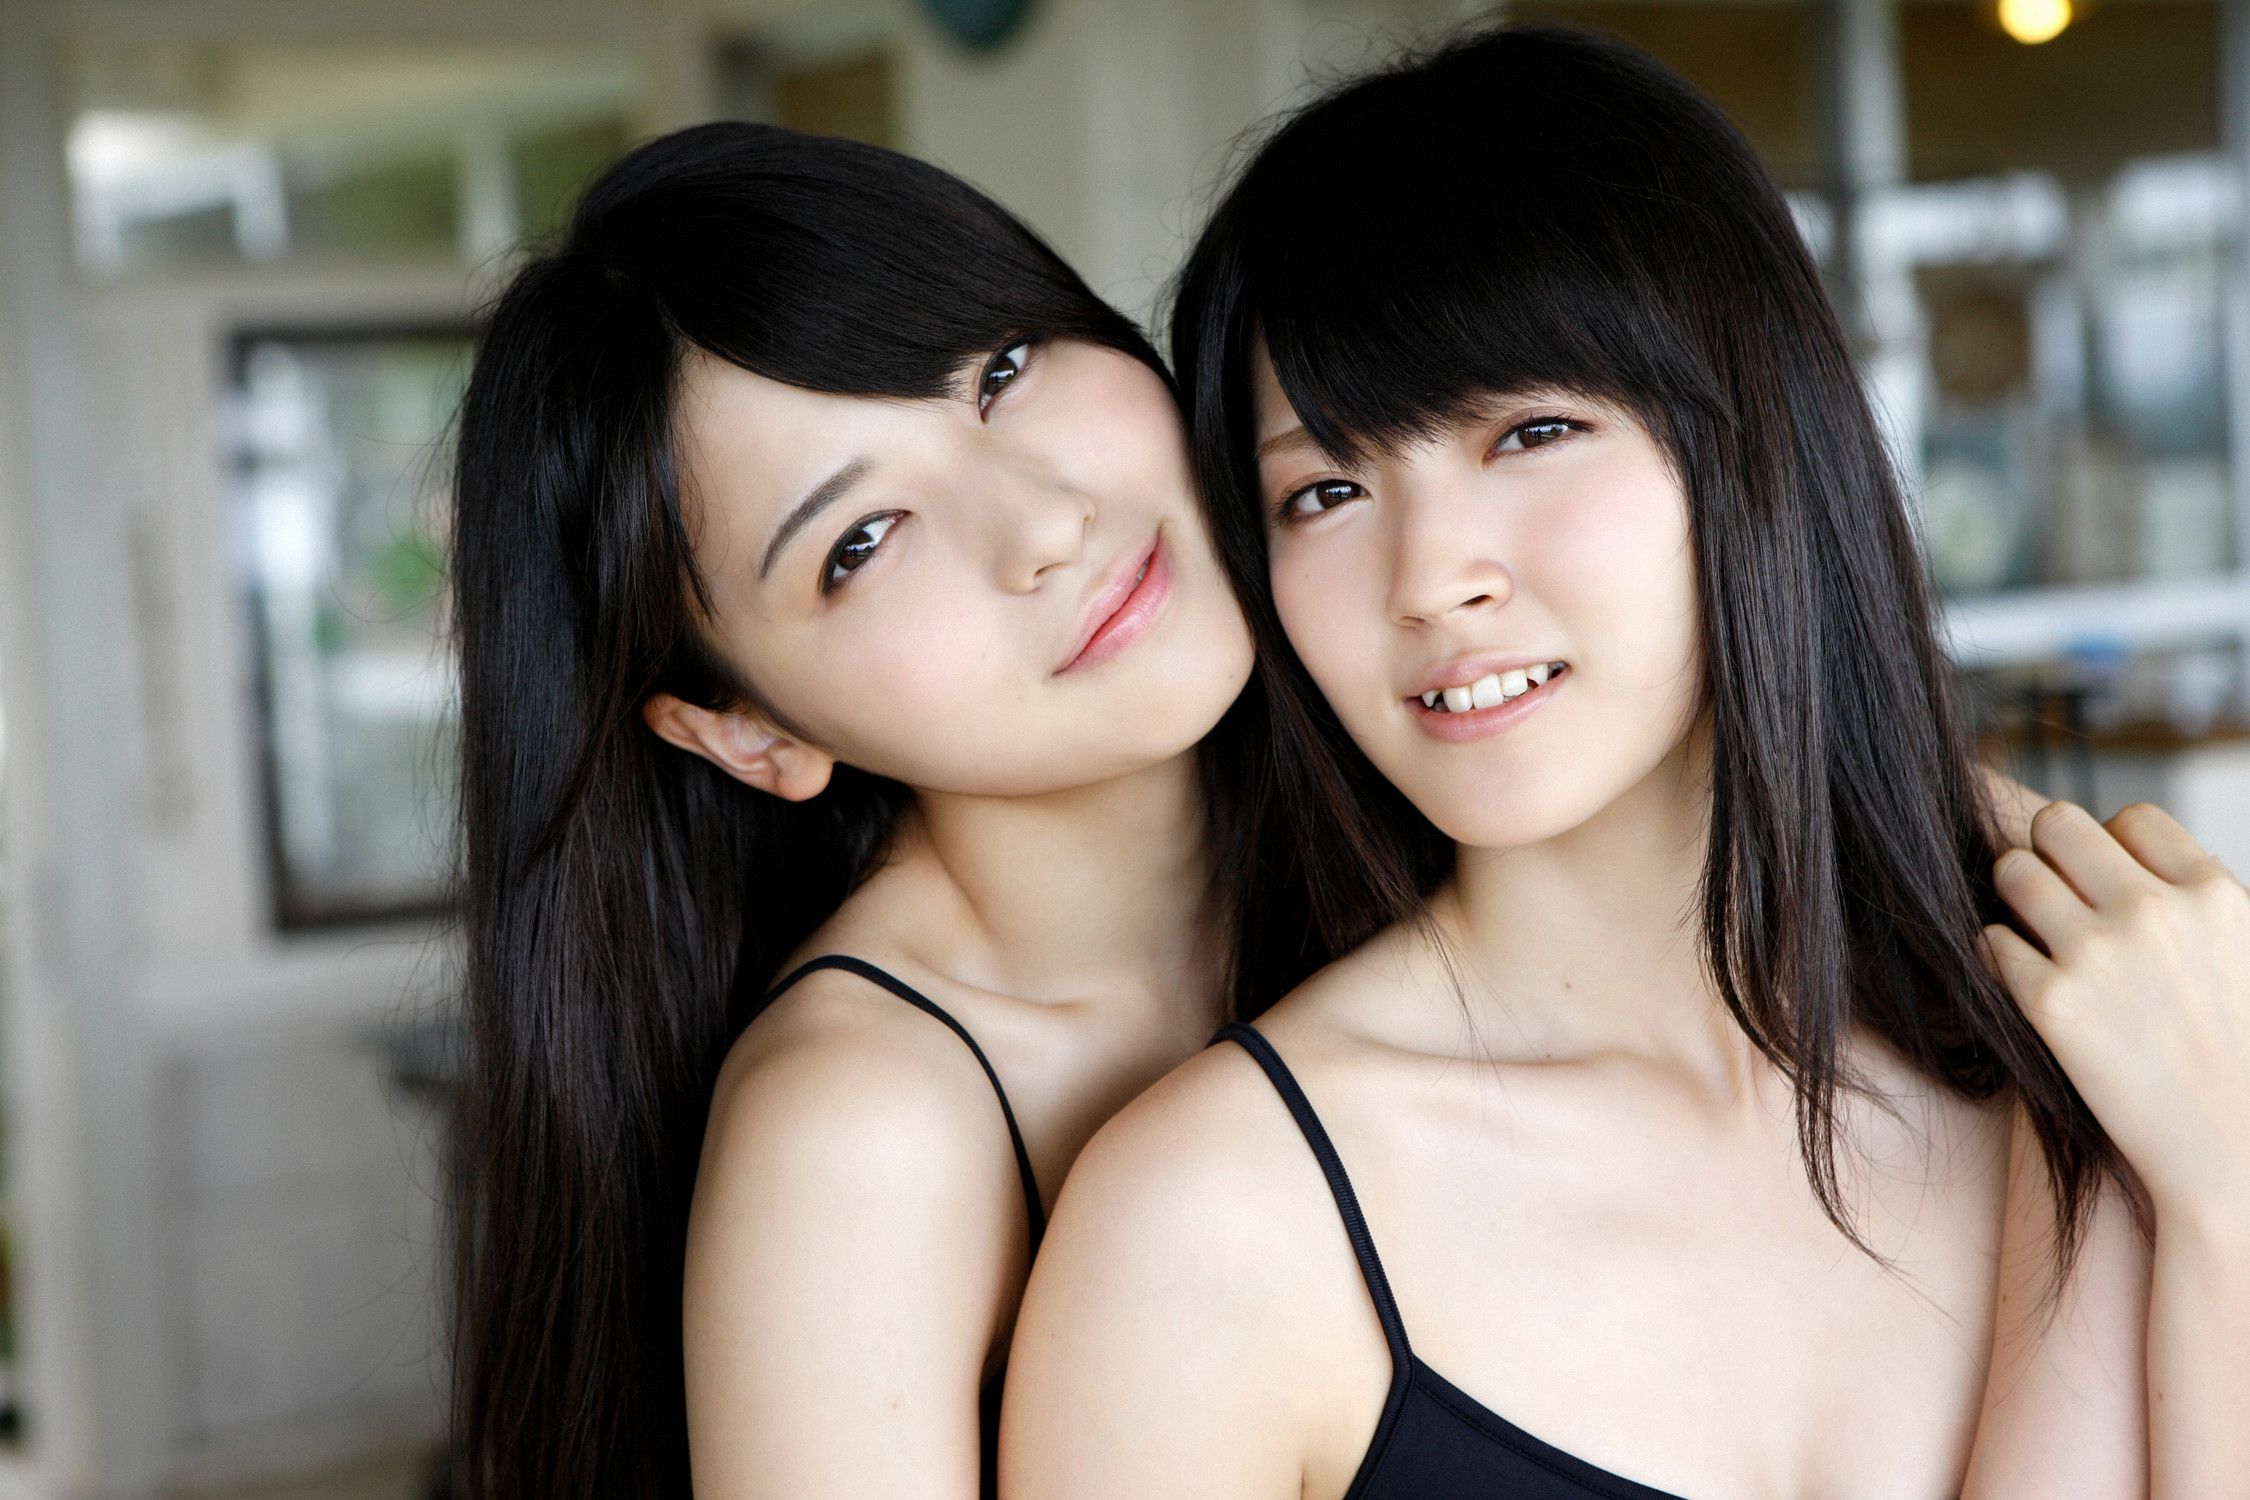 Jap girls. Airi Suzuki and Maimi Yajima. Японская девушка. Две девочки азиатки. Красивые женщины Японии.